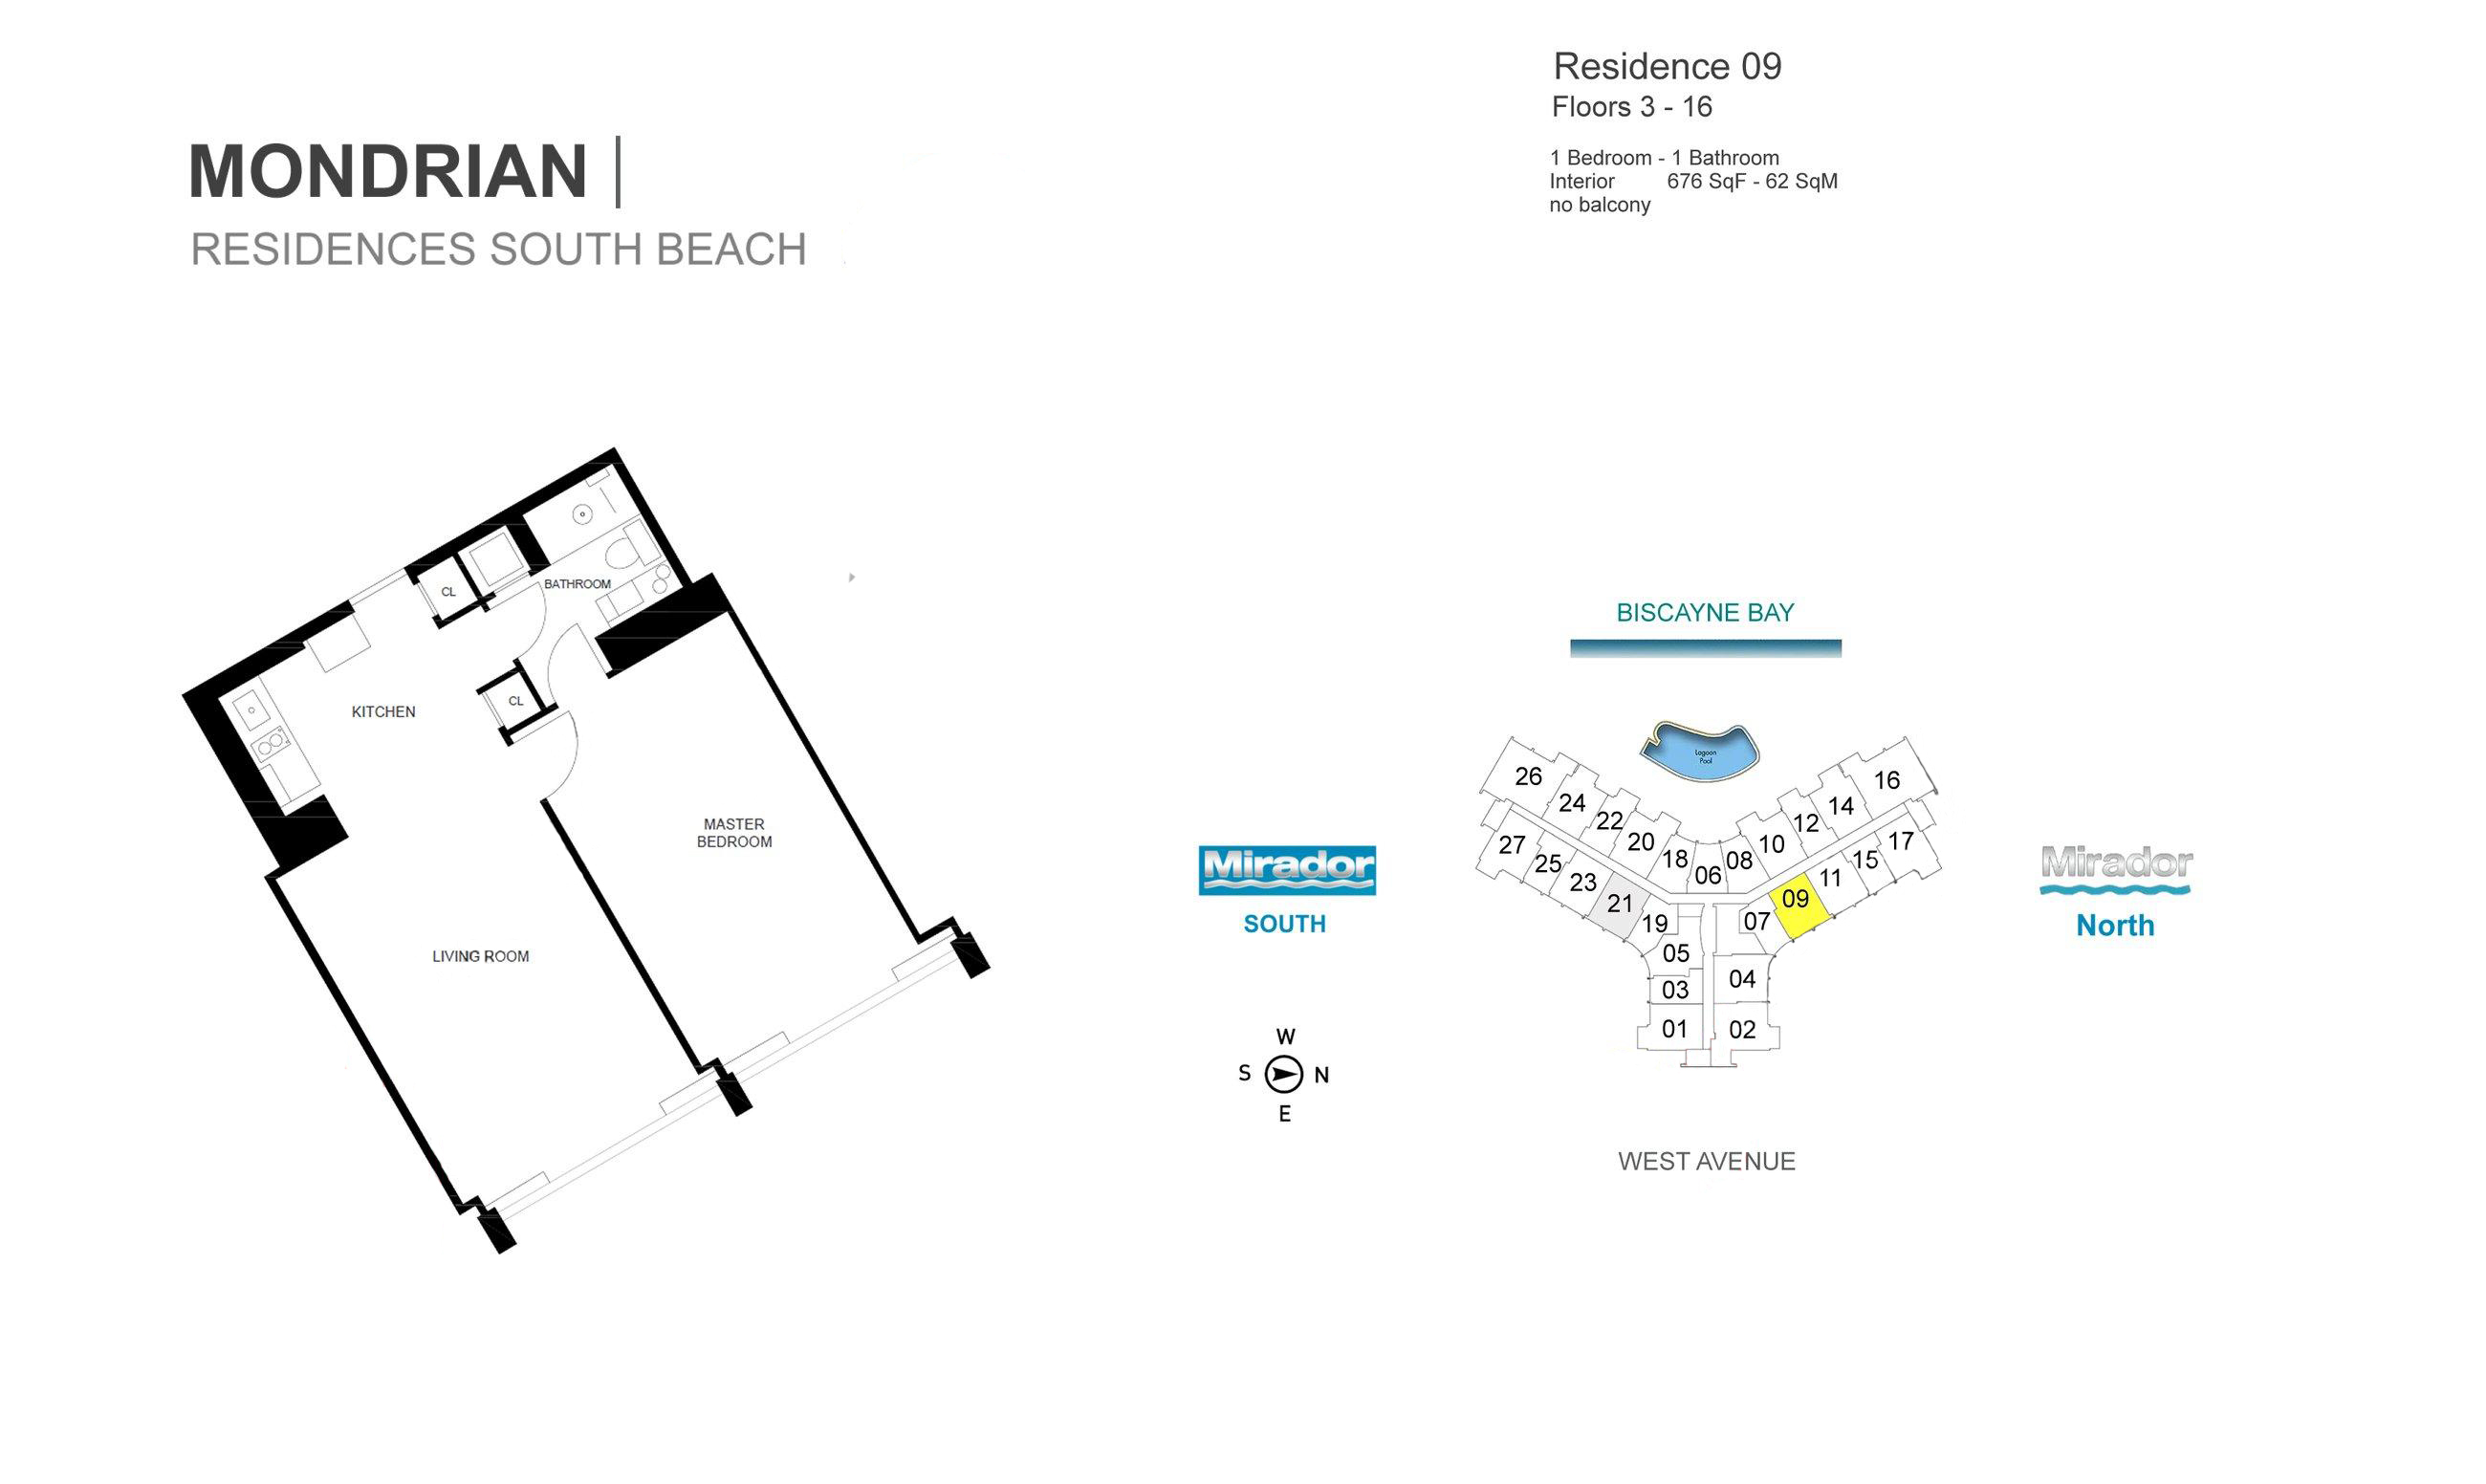 Mondrian South Beach Residence 09